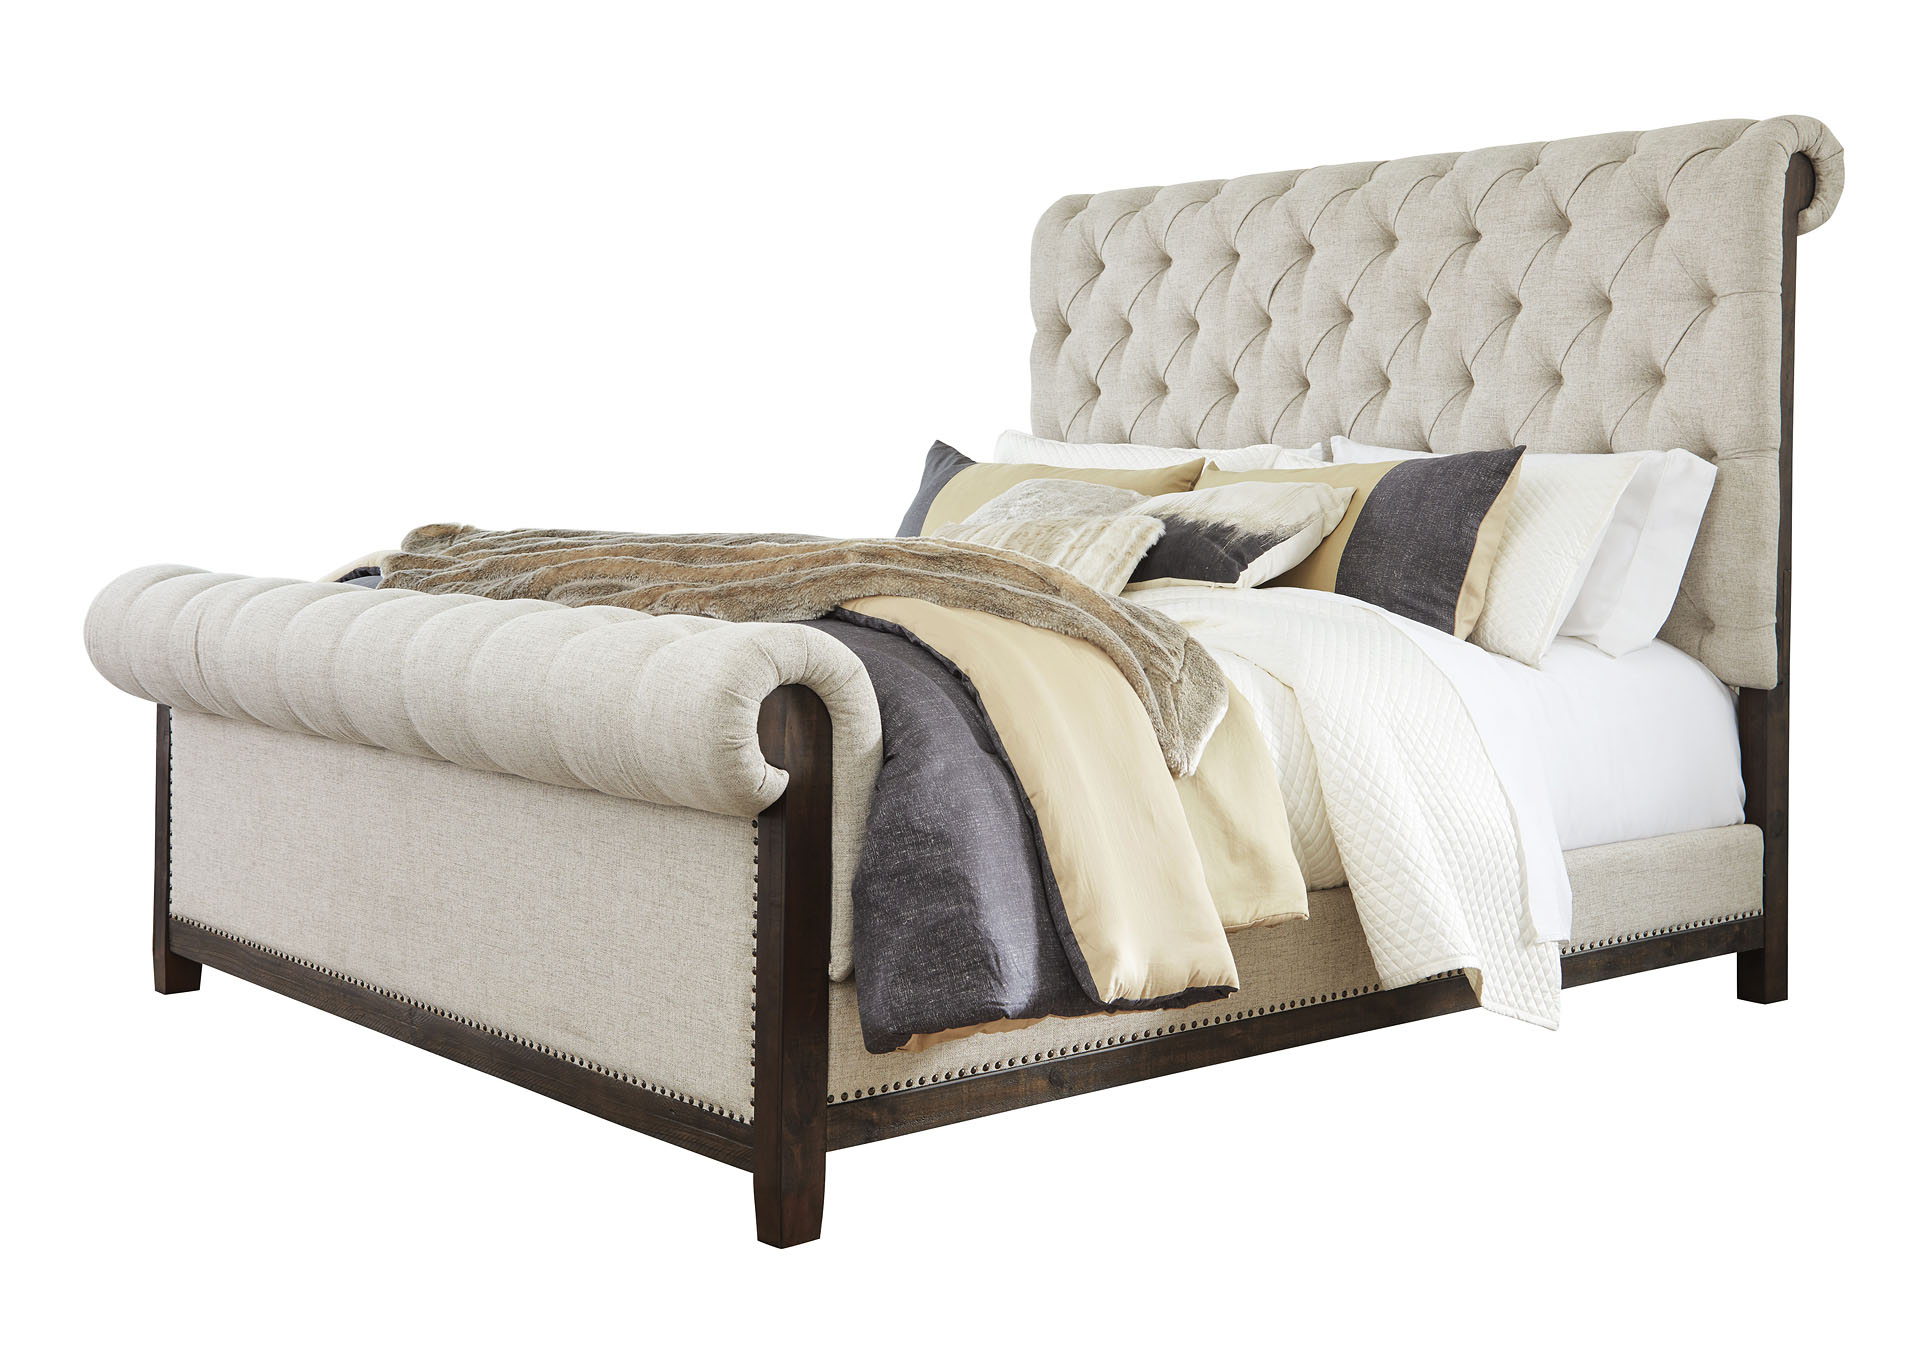 Hillcott King Bed Ashley Furniture, Windville King Upholstered Sleigh Bed